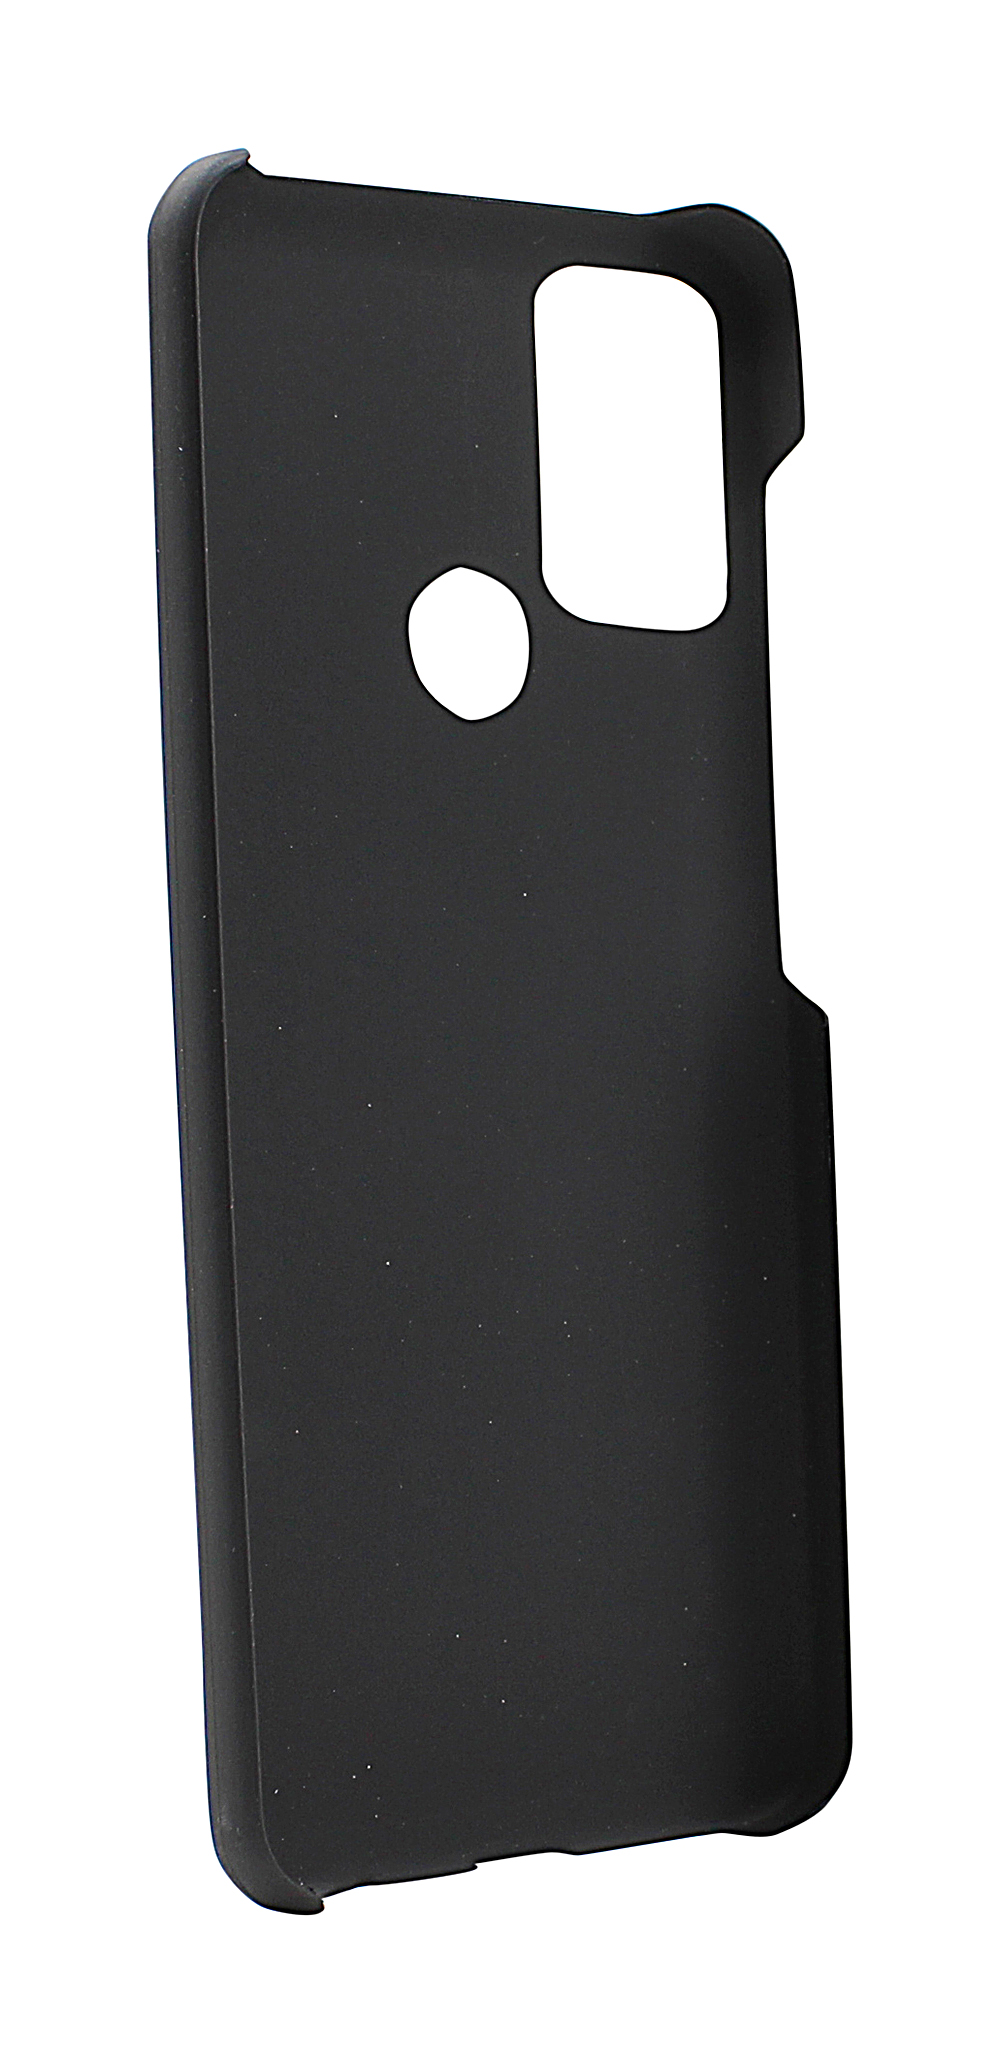 CoverInSkimblocker XL Magnet Fodral Motorola Moto G50